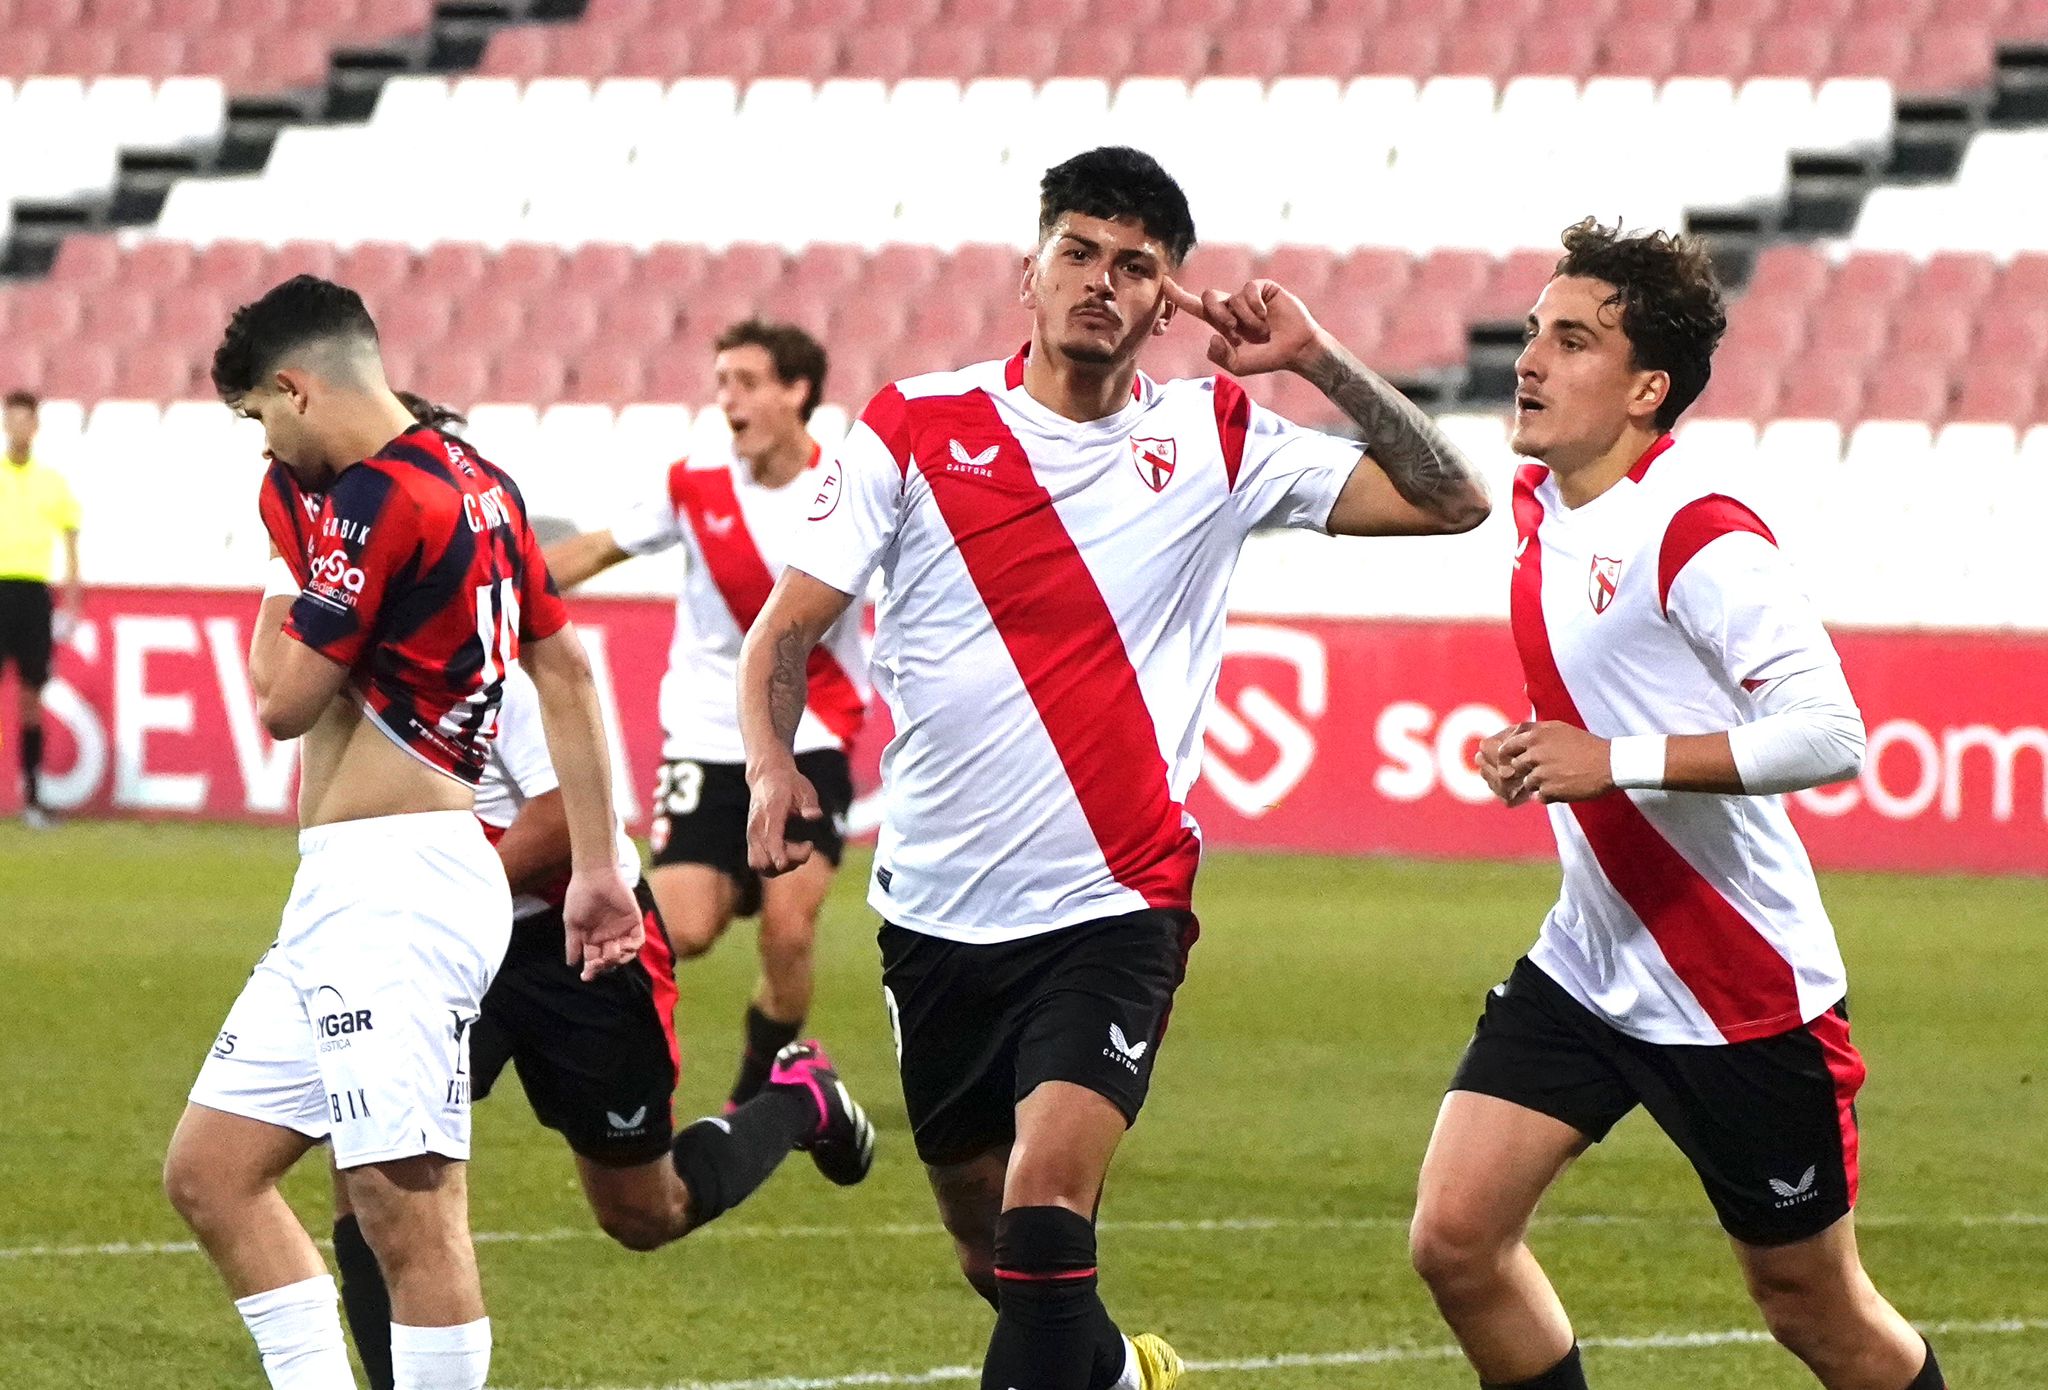 Imagen de Talaverón celebrando un gol